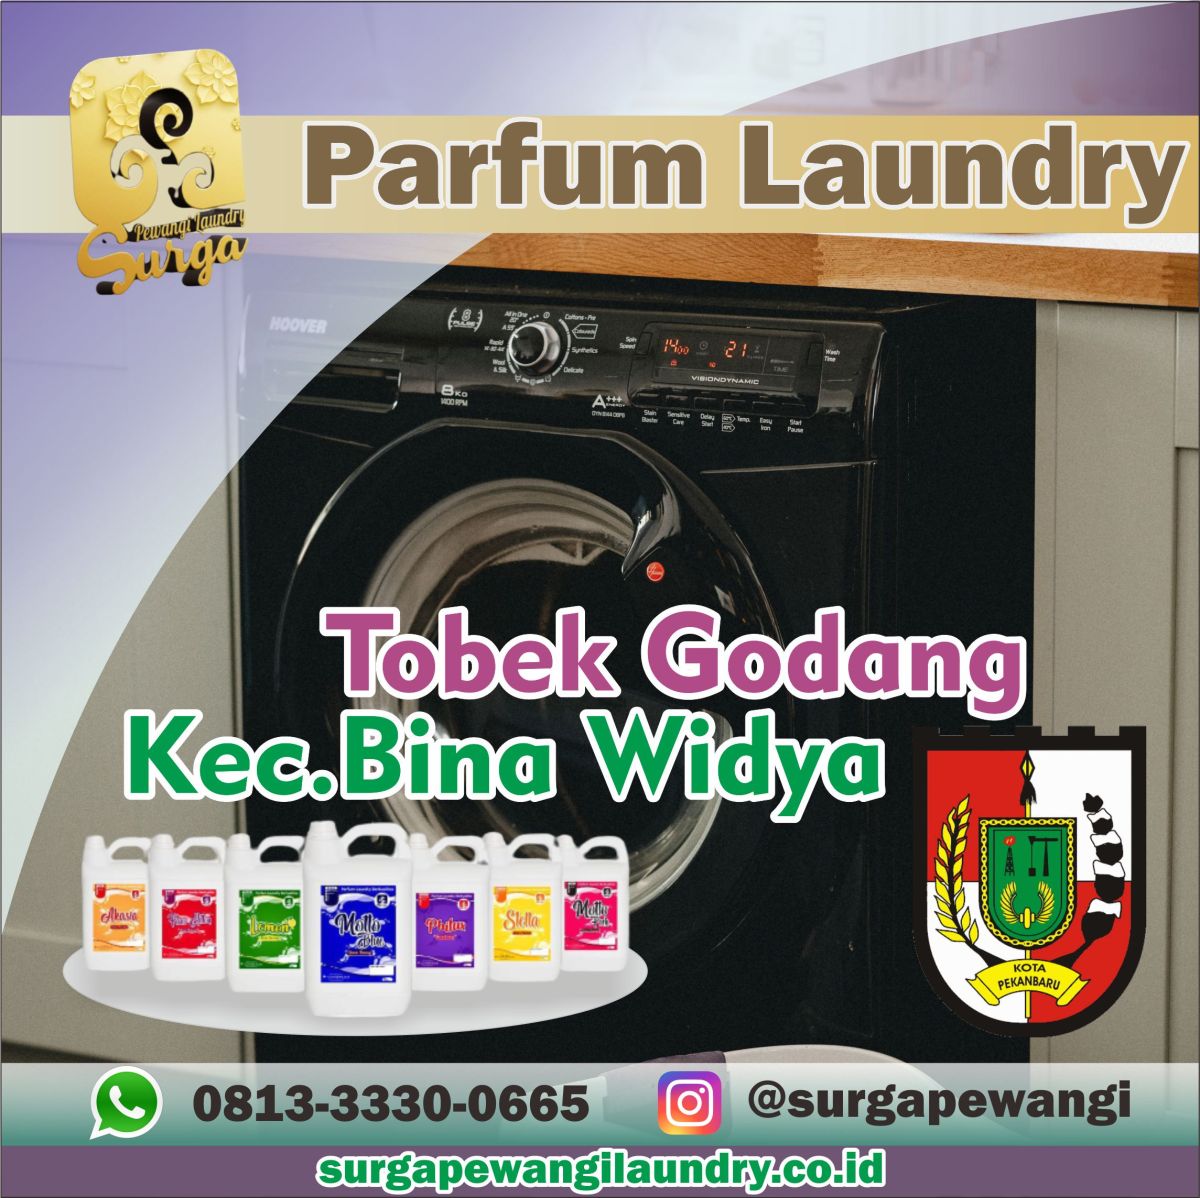 Parfum Laundry Tobek Godang, Bina Widya